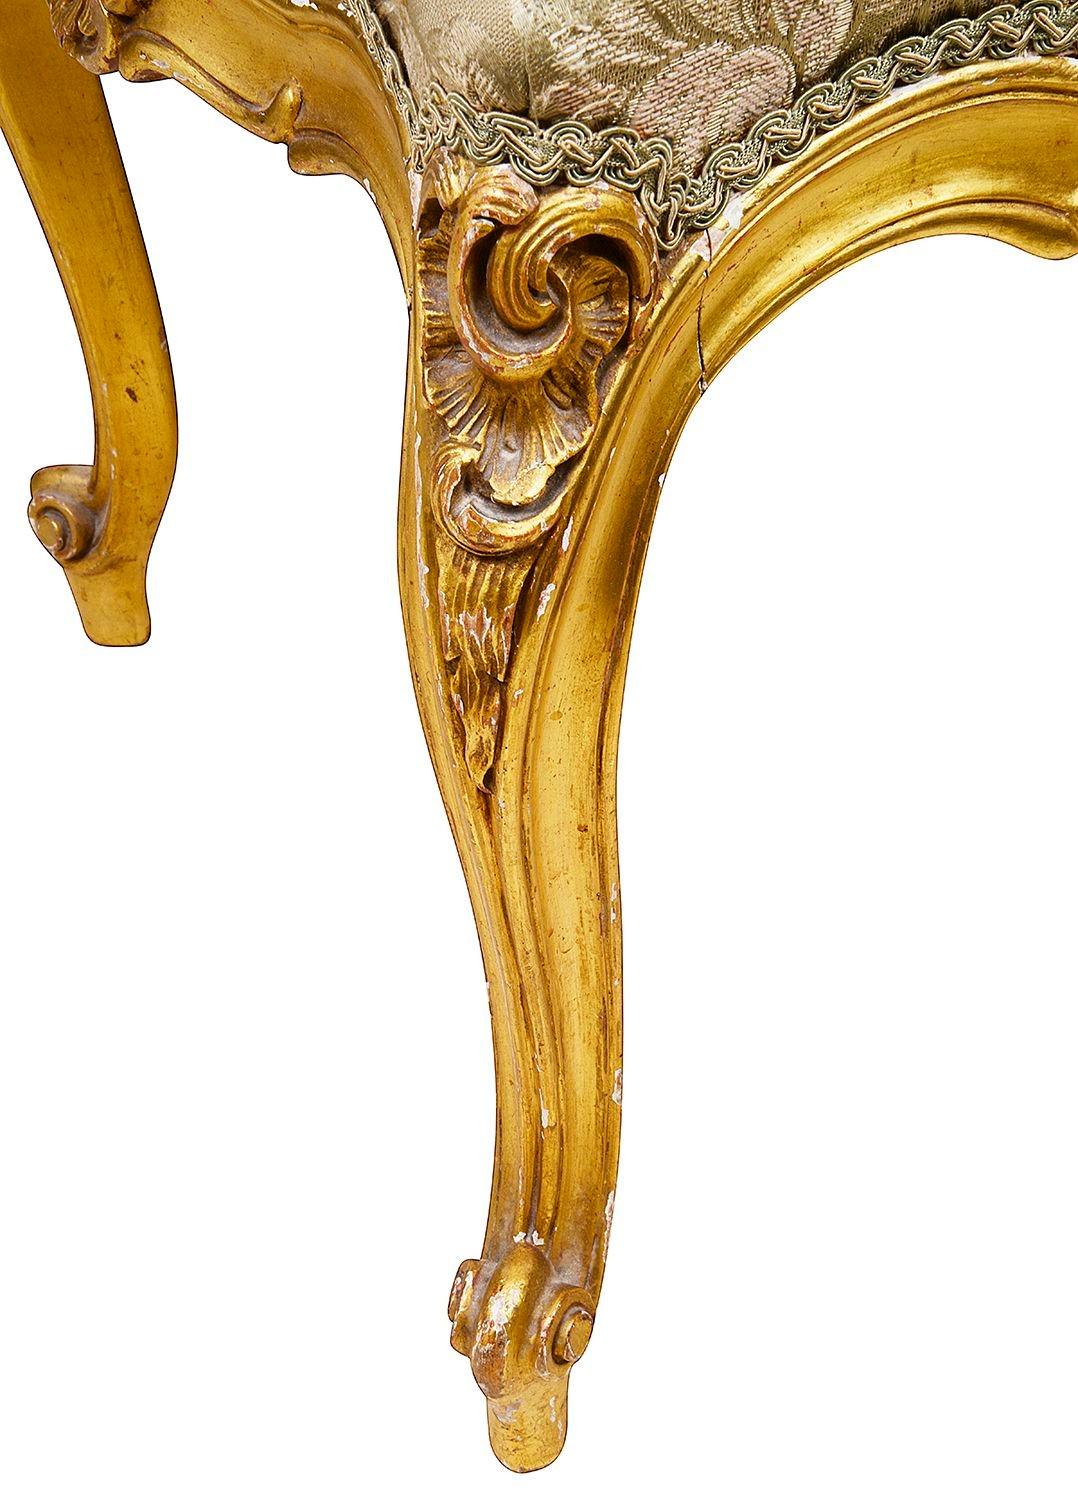 A good quality French 19th century French carved giltwood with scrolling foliate decoration, raised on elegant cabriole legs, circa 1880.
 
Batch 70 C\C.